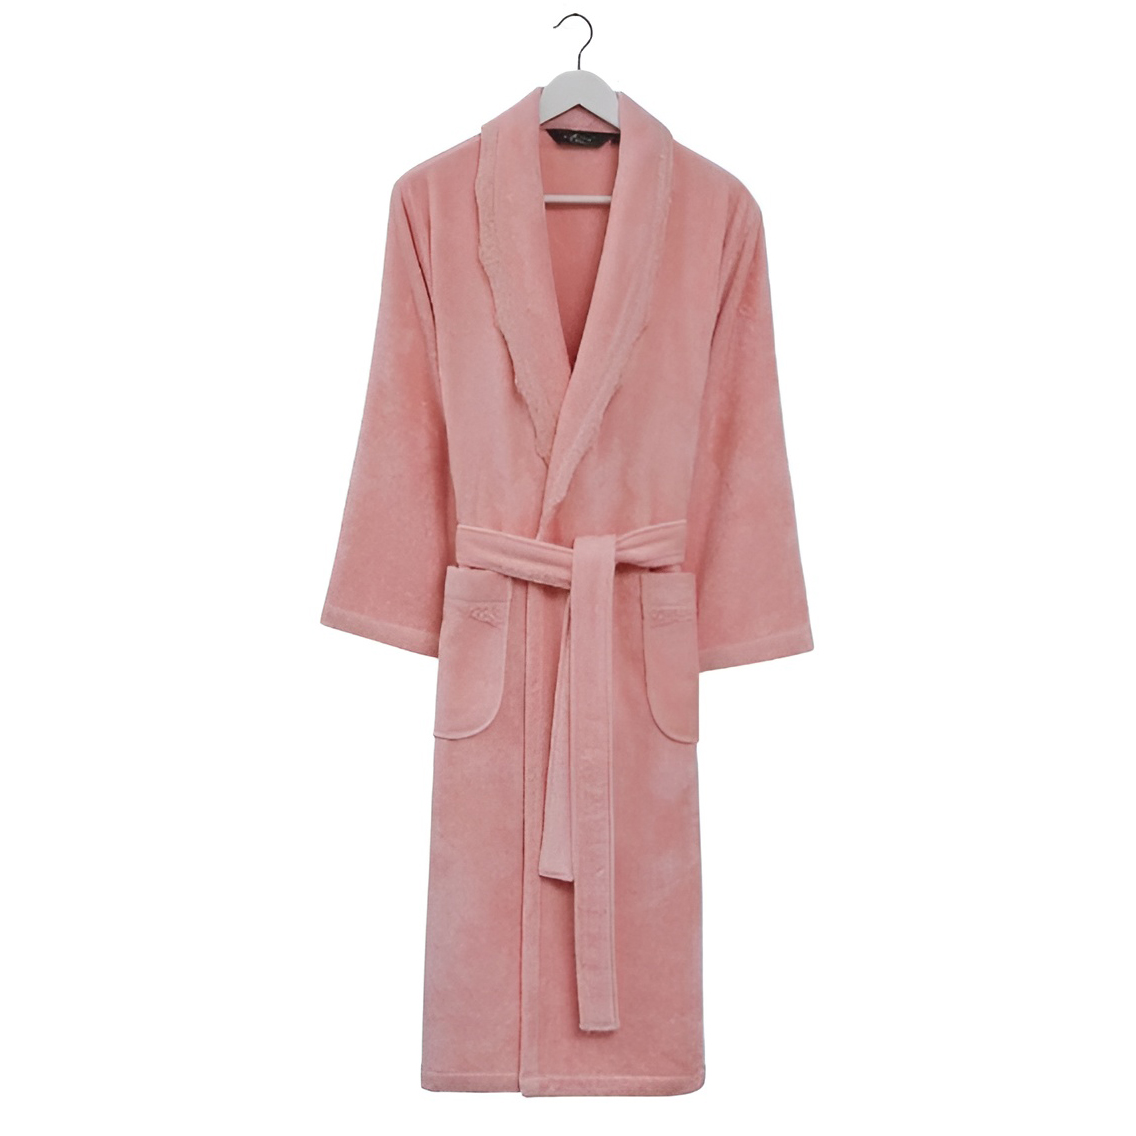 Банный халат Stella цвет: розовый (S) Soft cotton